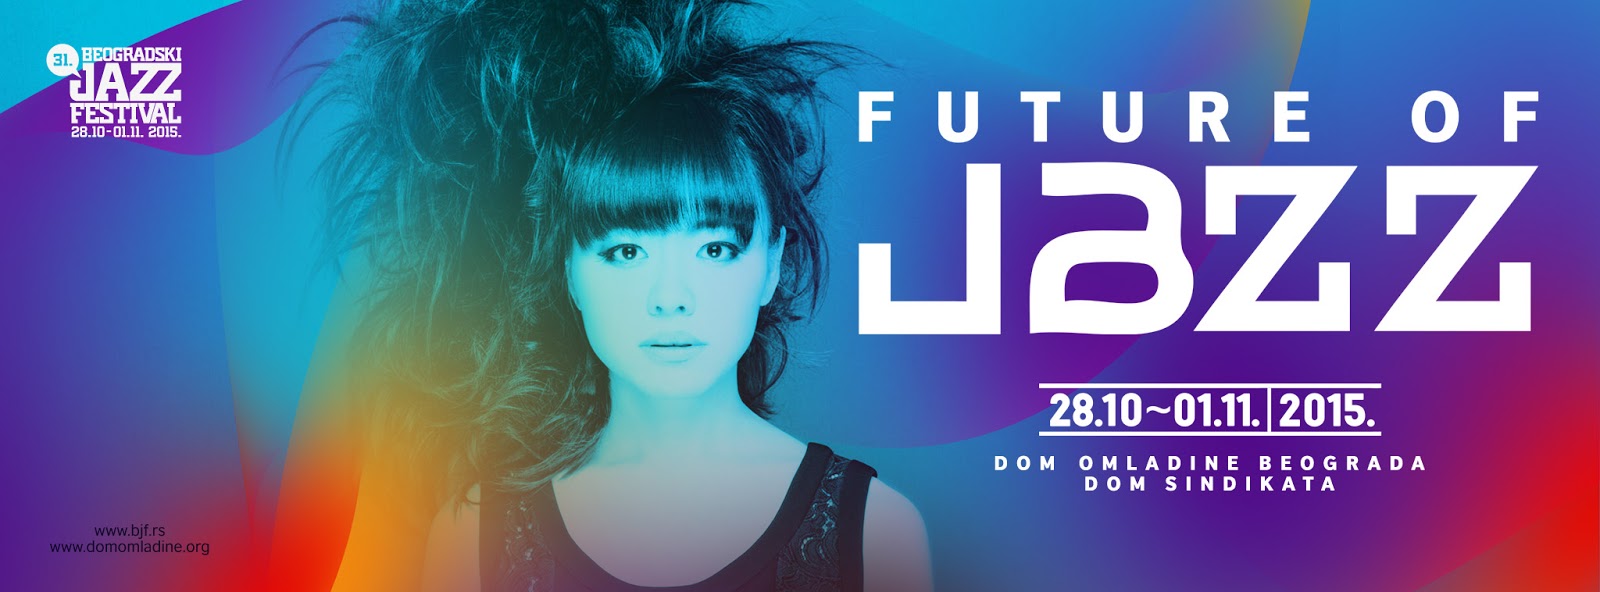 31. Belgrade Jazz Festival: Future of Jazz (Belgrad, Dom omladine Beograda, Dom sindikata - 28.10-01.11.2015)